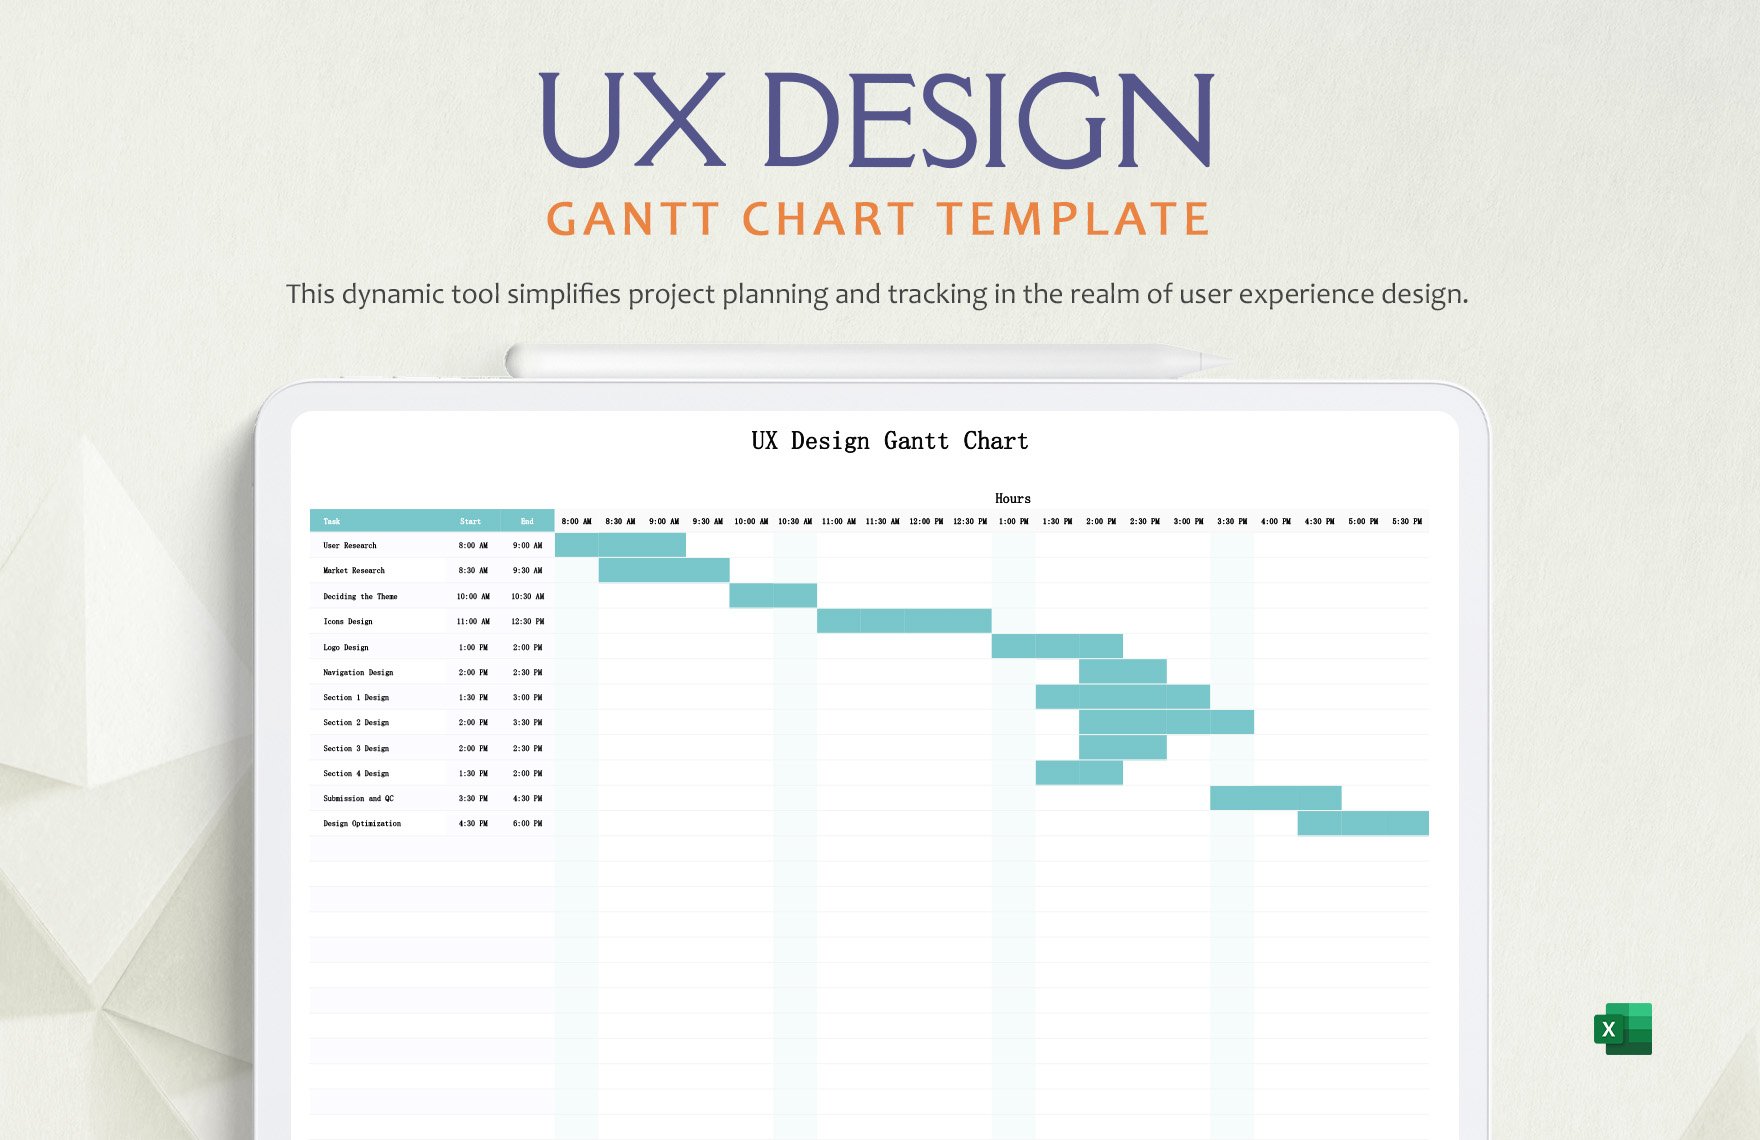 UX Design Gantt Chart Template in Excel